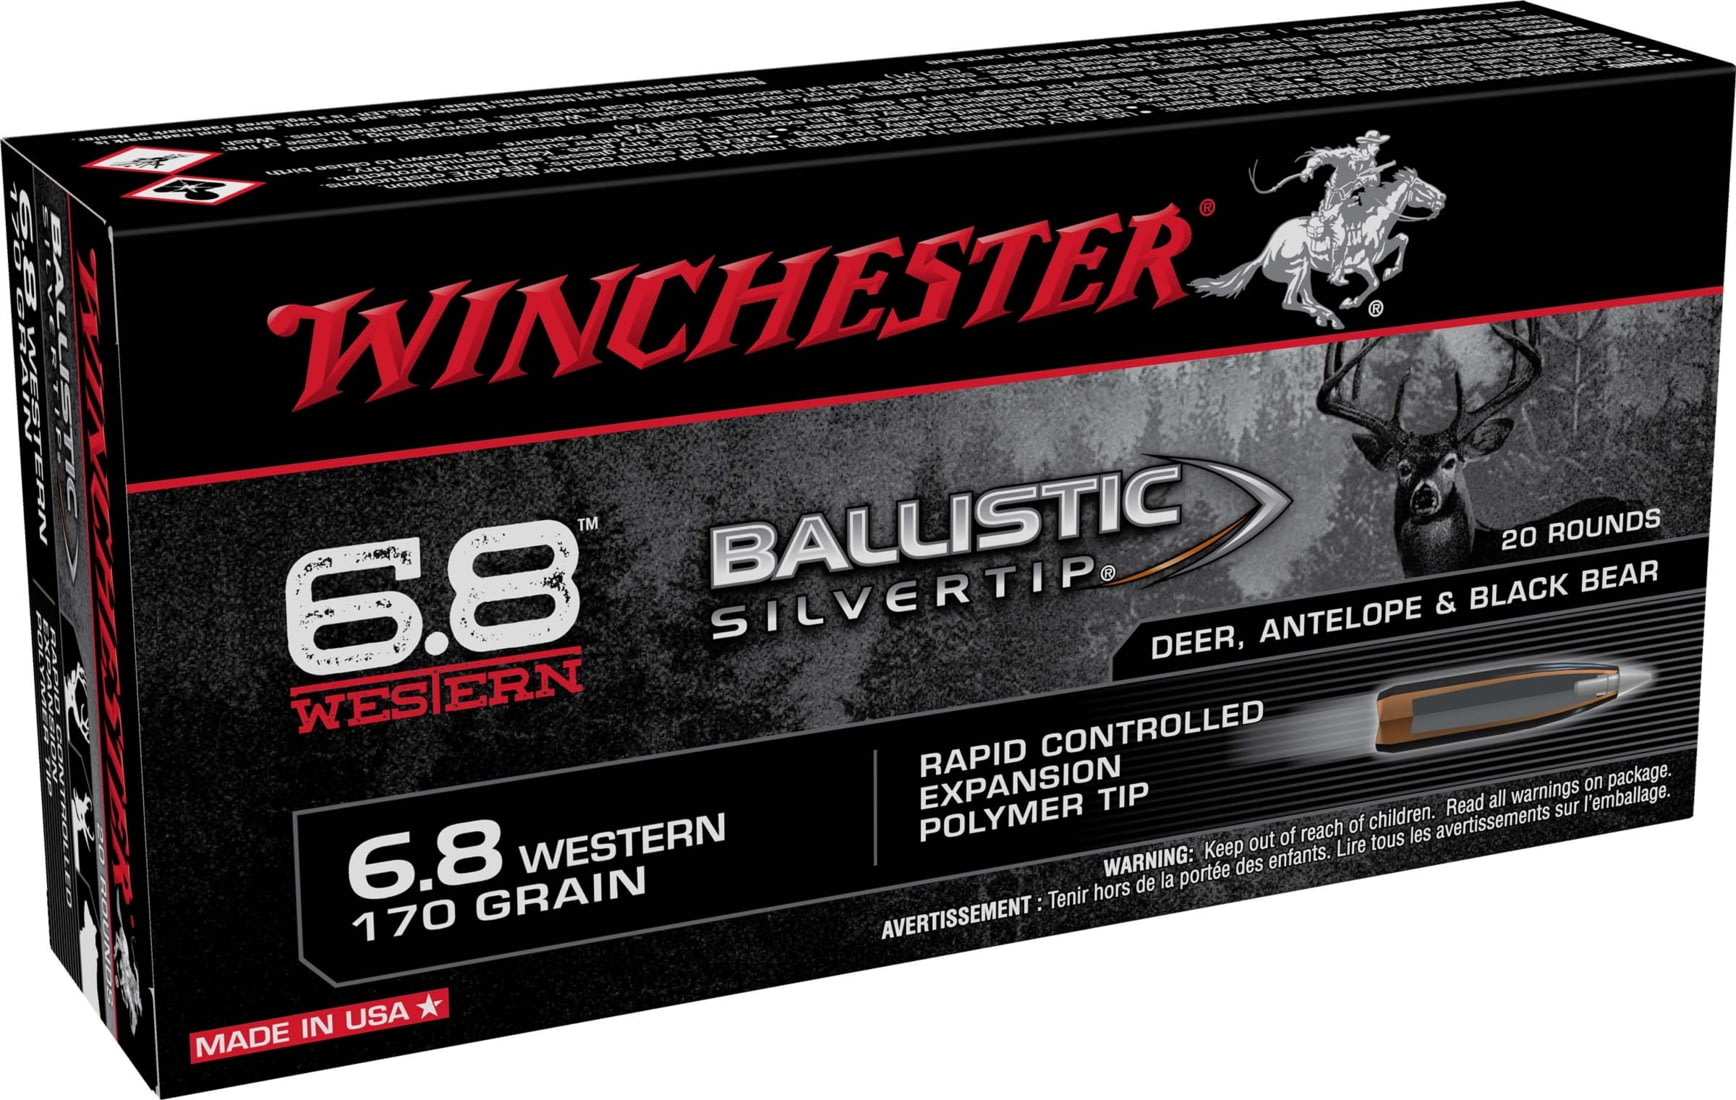 Winchester Ballistic Silvertip 6.8 Western 170 gr. Centerfire Rifle Ammunition